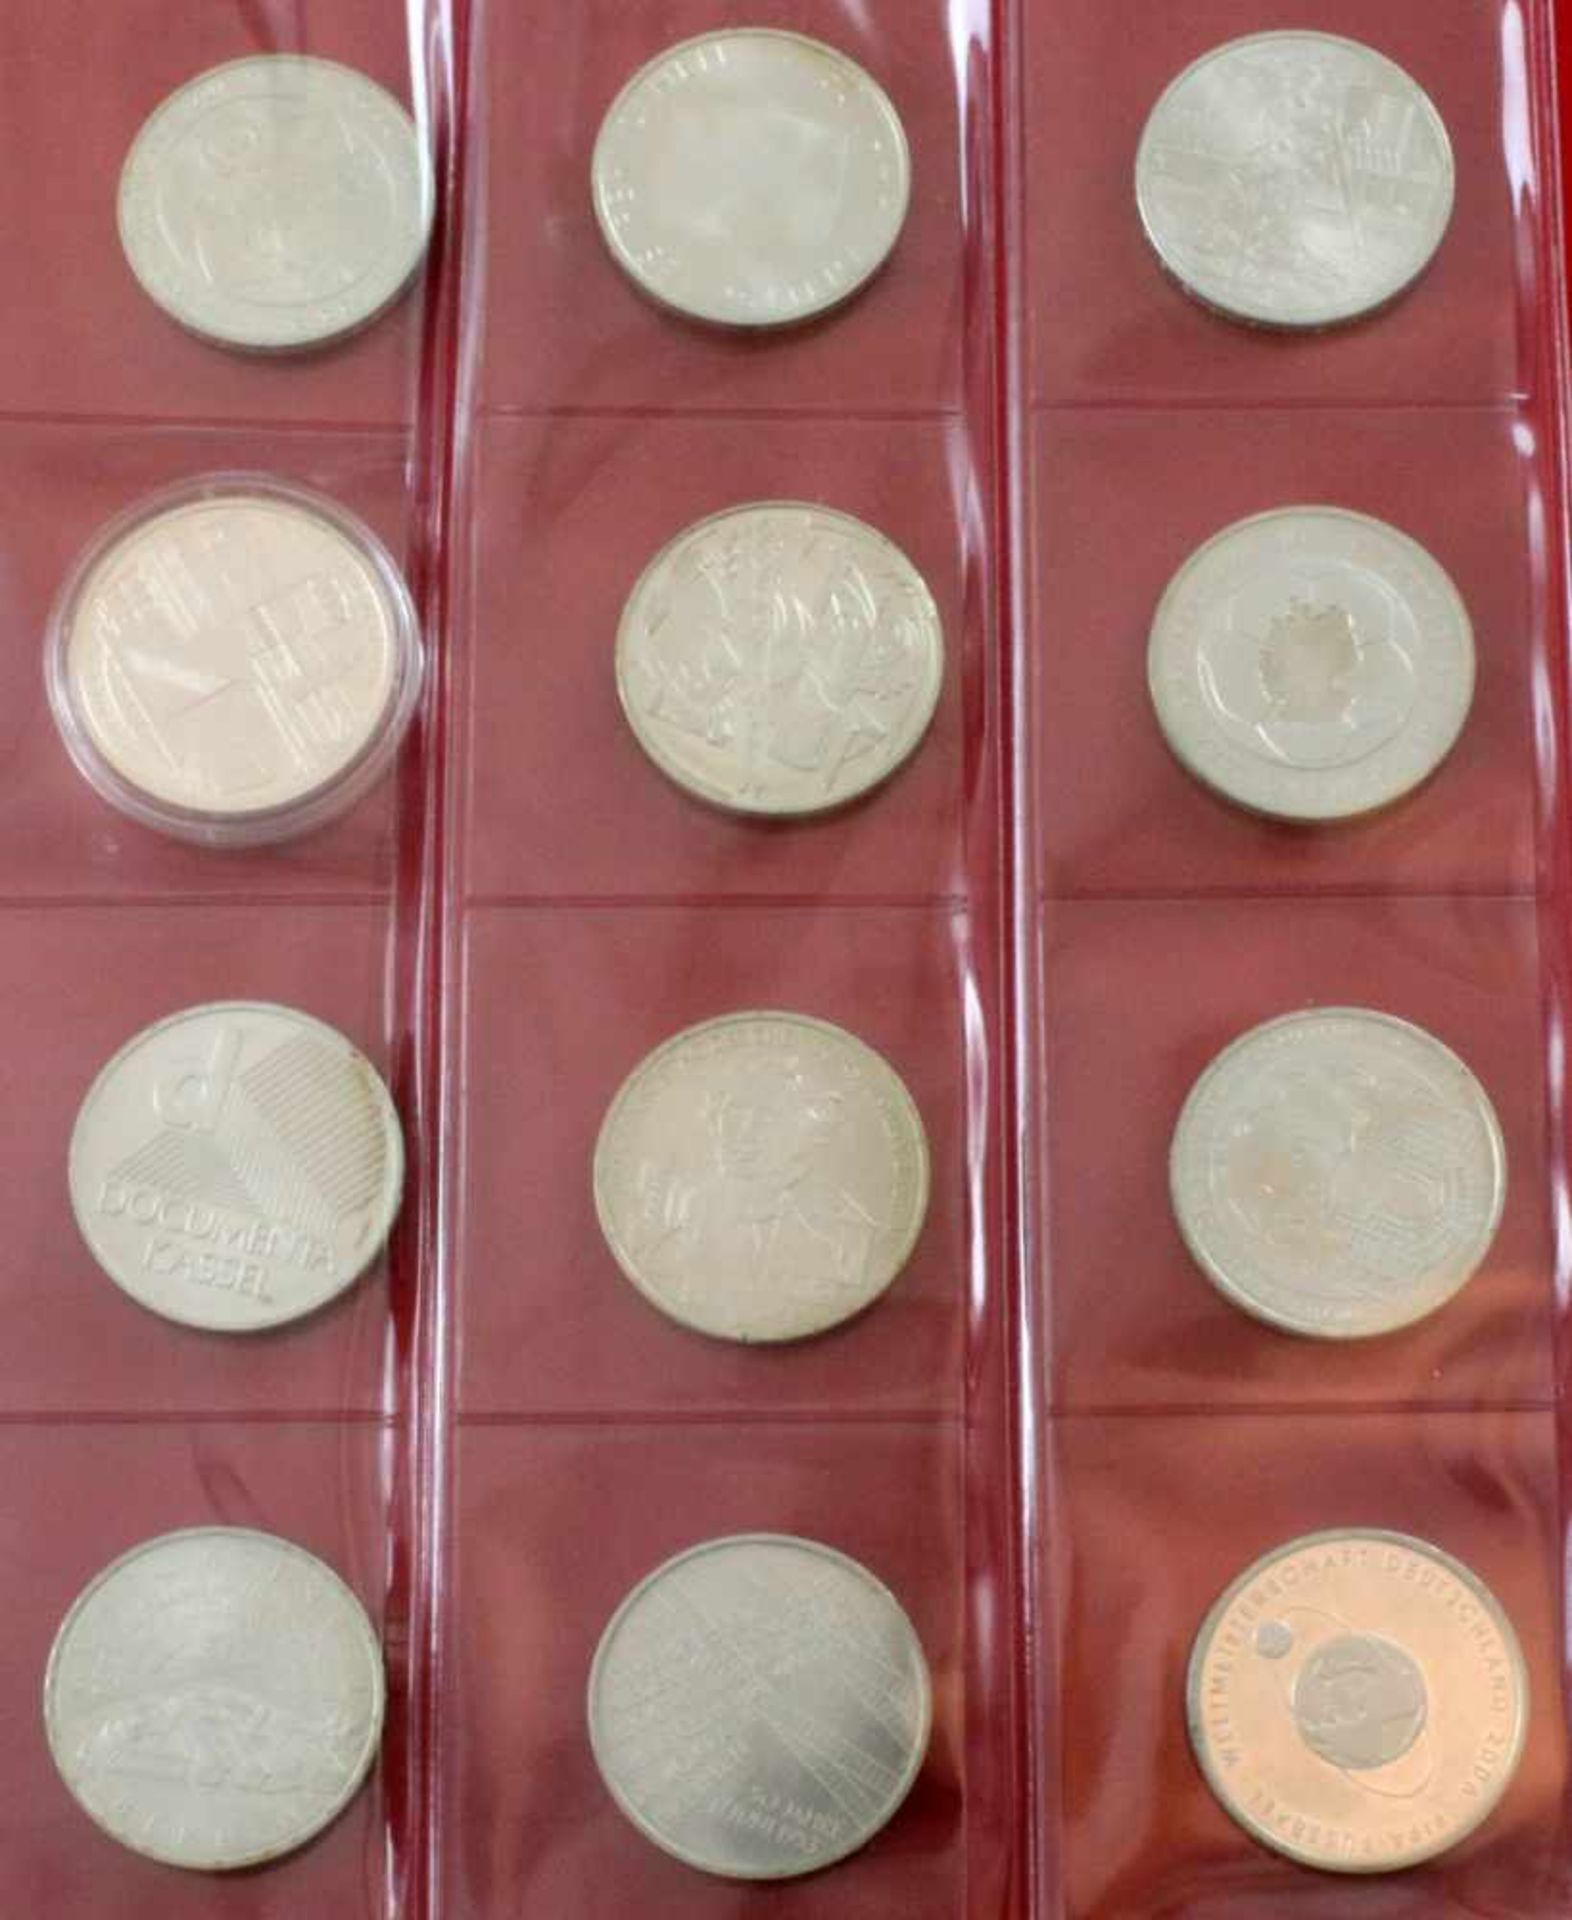 Sammlung 10  Münzen ab 2002 Sammelalbum mit 53 Münzen, alle unzirkuliert / Stempelglanz. - Bild 2 aus 4